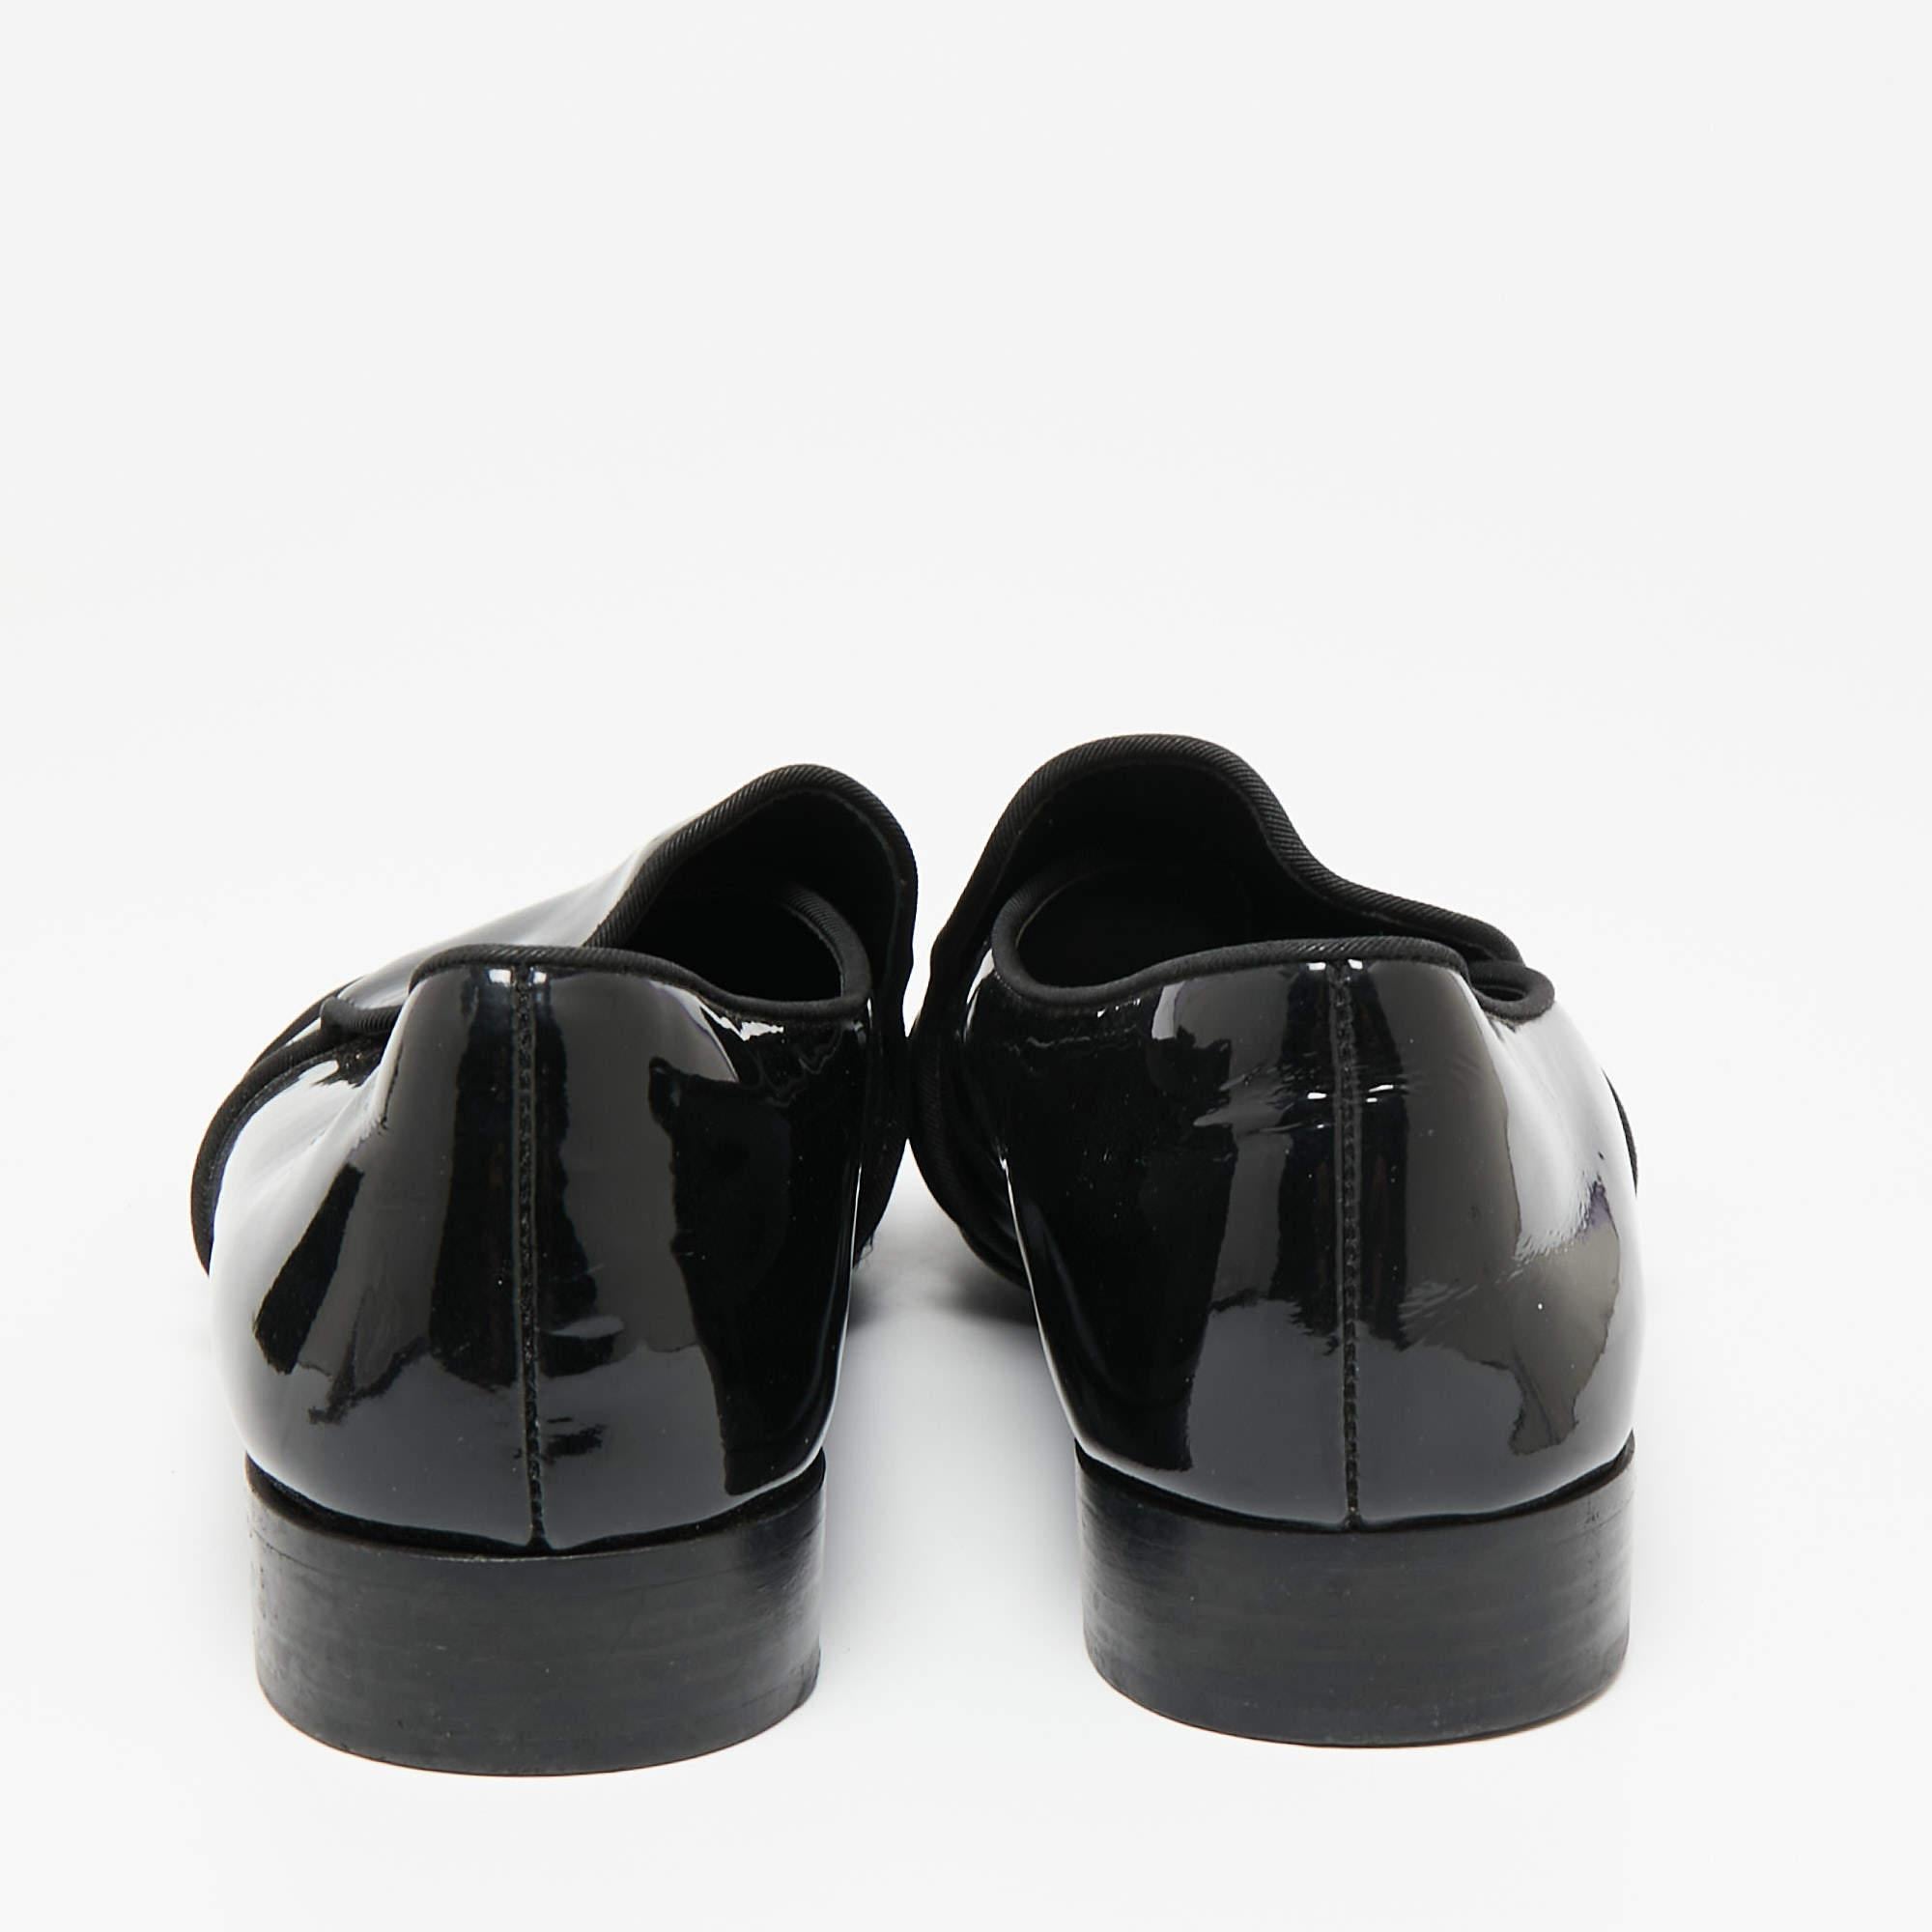 Giuseppe Zanotti Black Patent Leather and Satin Cap Toe Smoking Slippers Size 40 In Good Condition For Sale In Dubai, Al Qouz 2